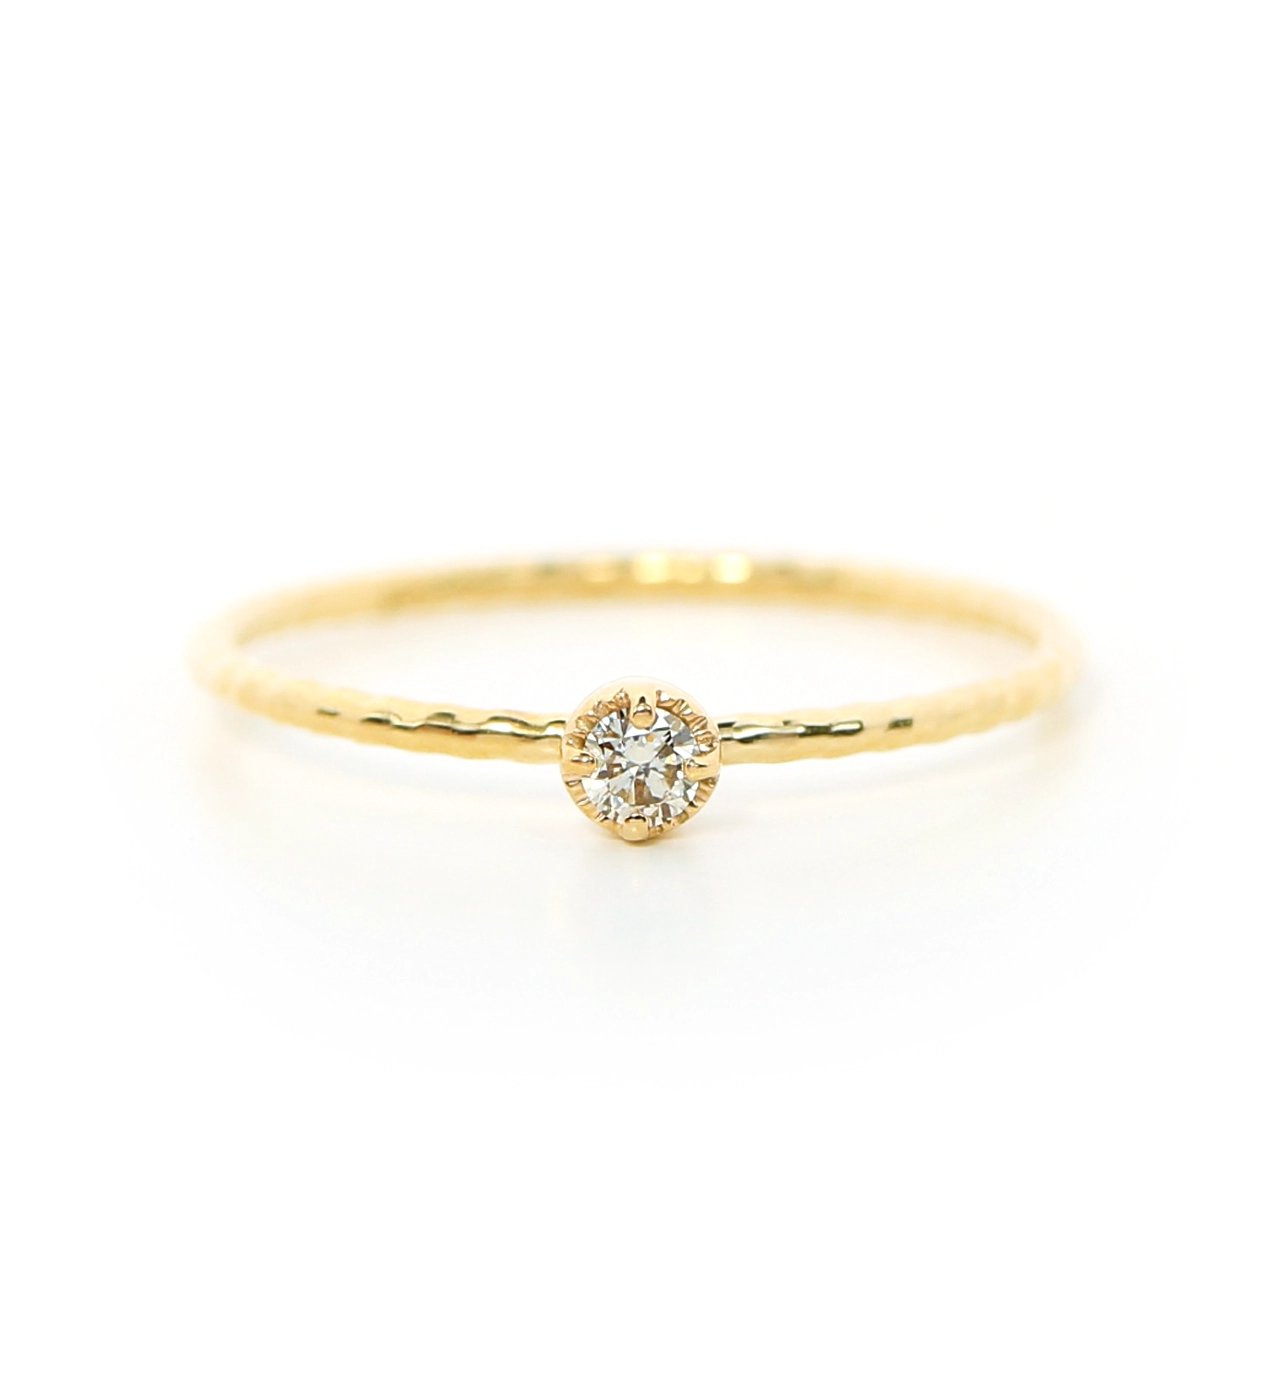 K10 一粒ダイヤモンドのピンキーリング(5号) 4月誕生石 ジュエリーブランド「RASPIA Jewelry」